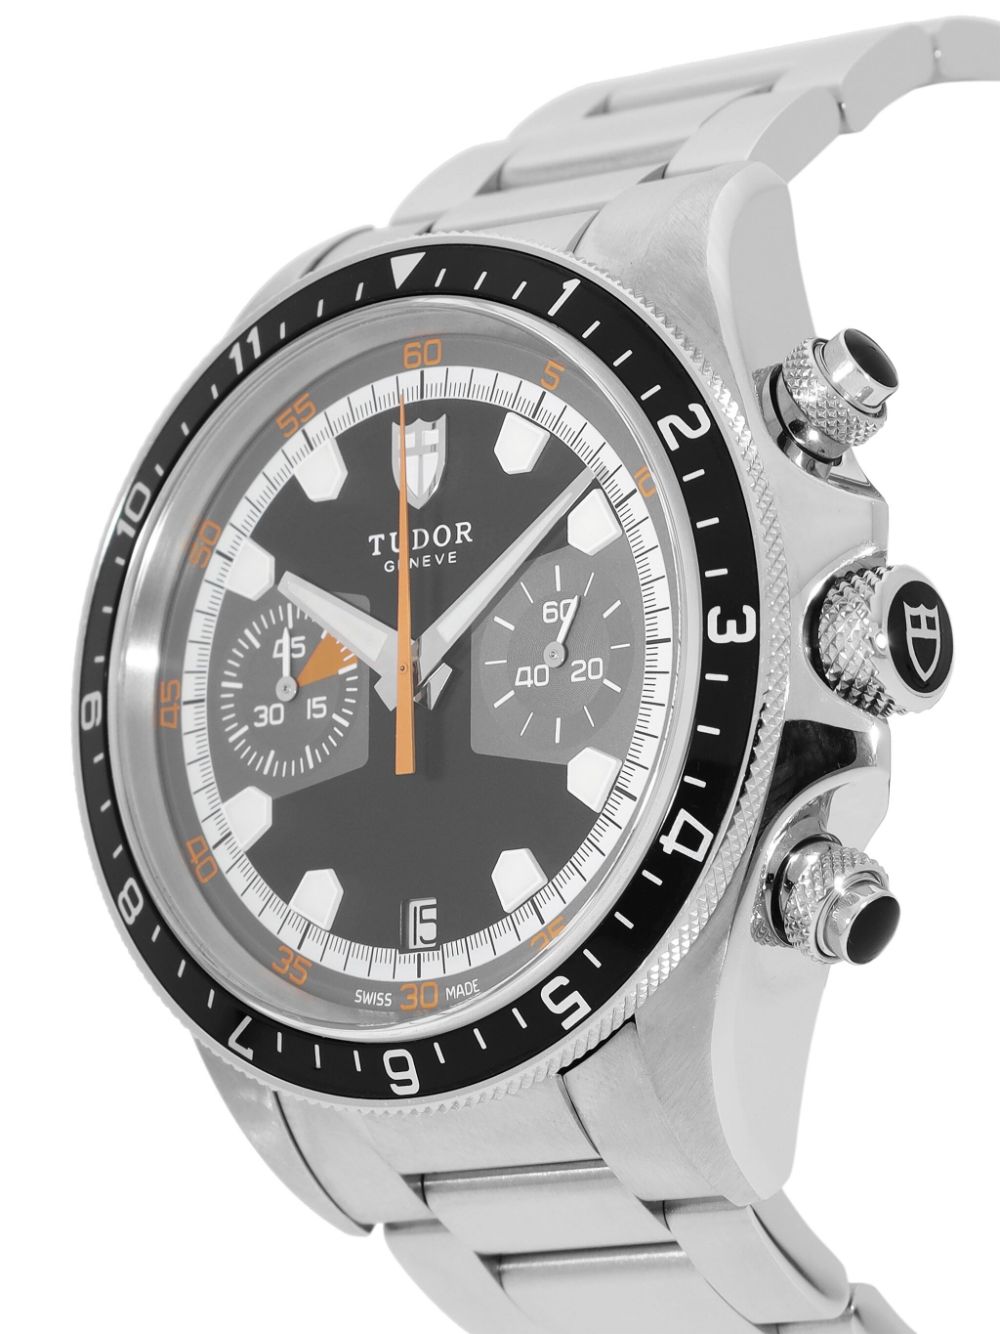 TUDOR 2016 pre-owned Heritage Chrono 42mm horloge - Zwart